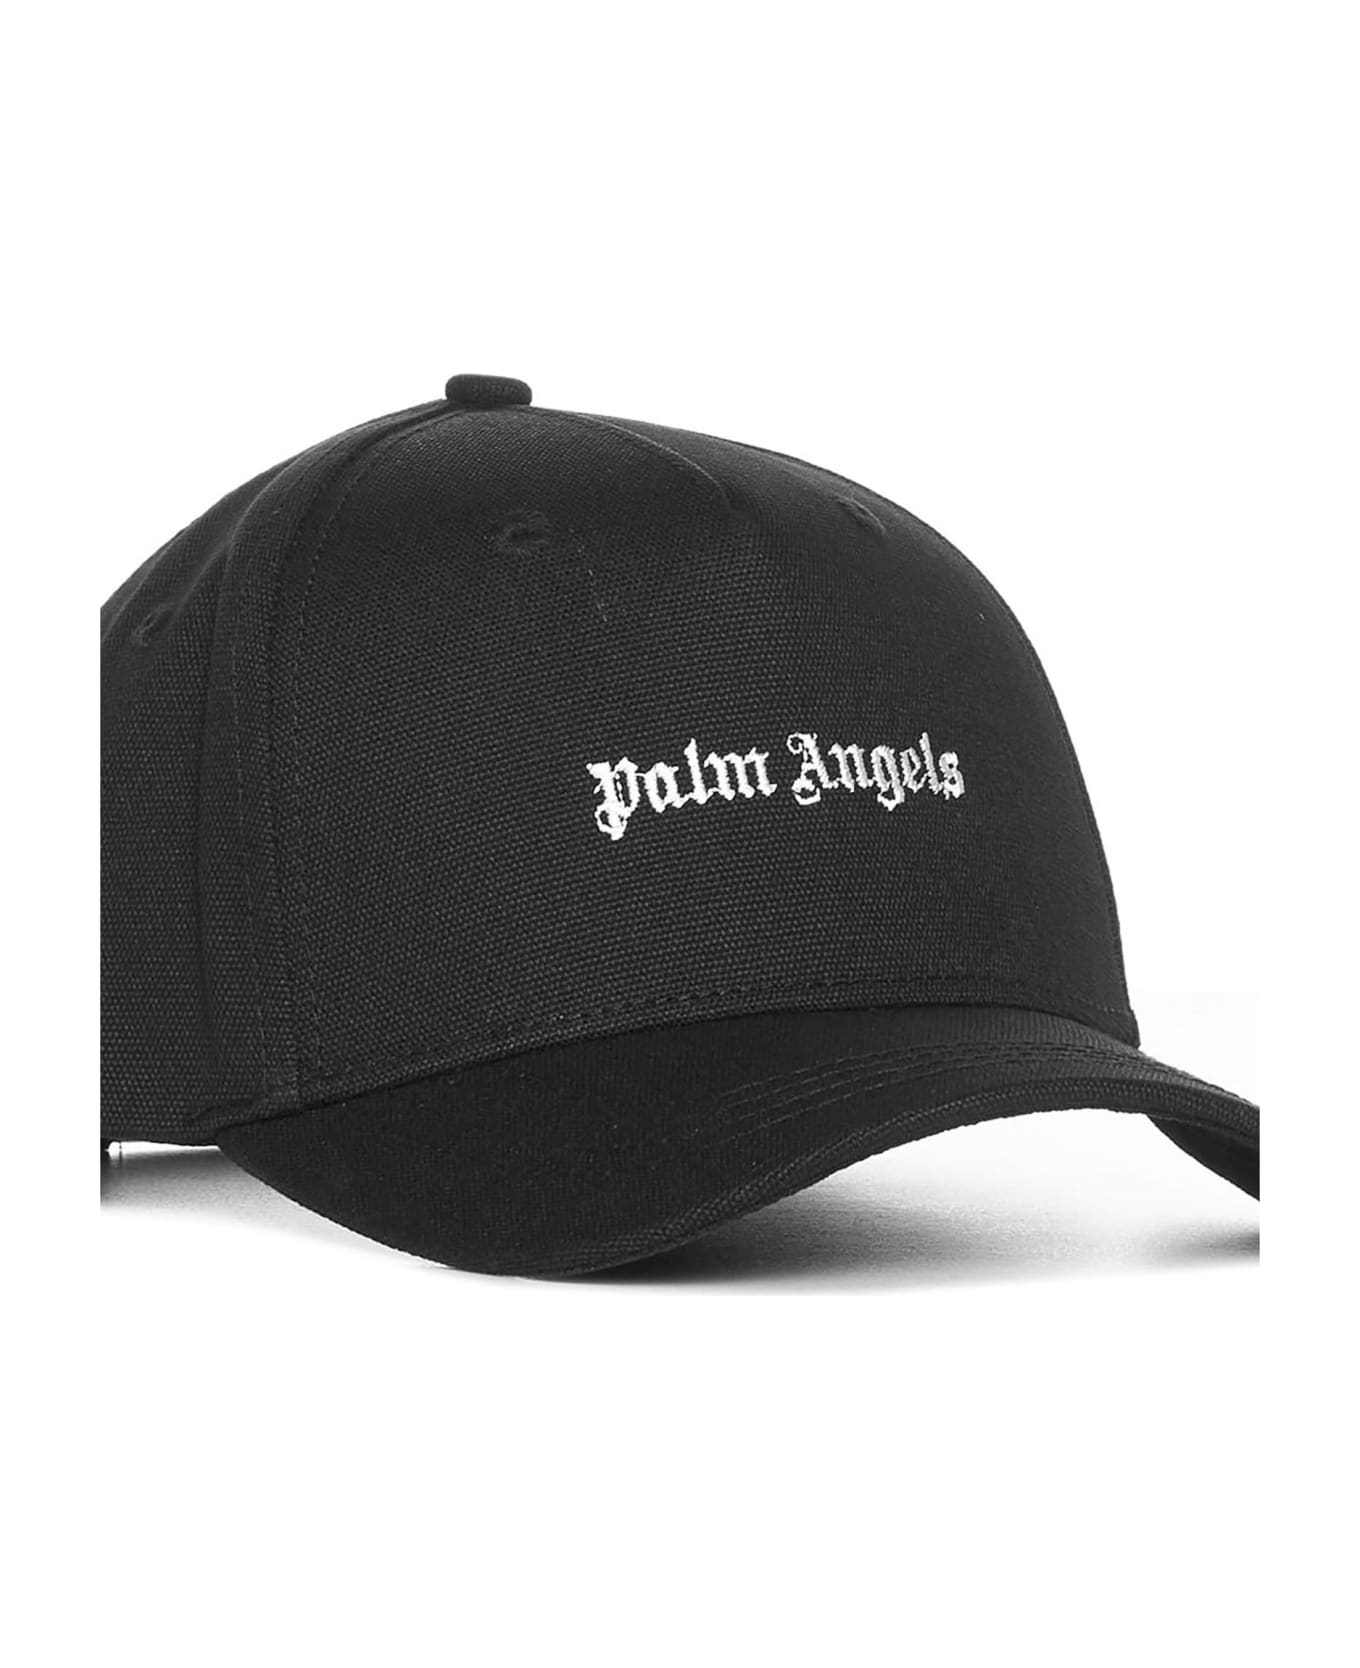 Palm Angels Hat - Black white